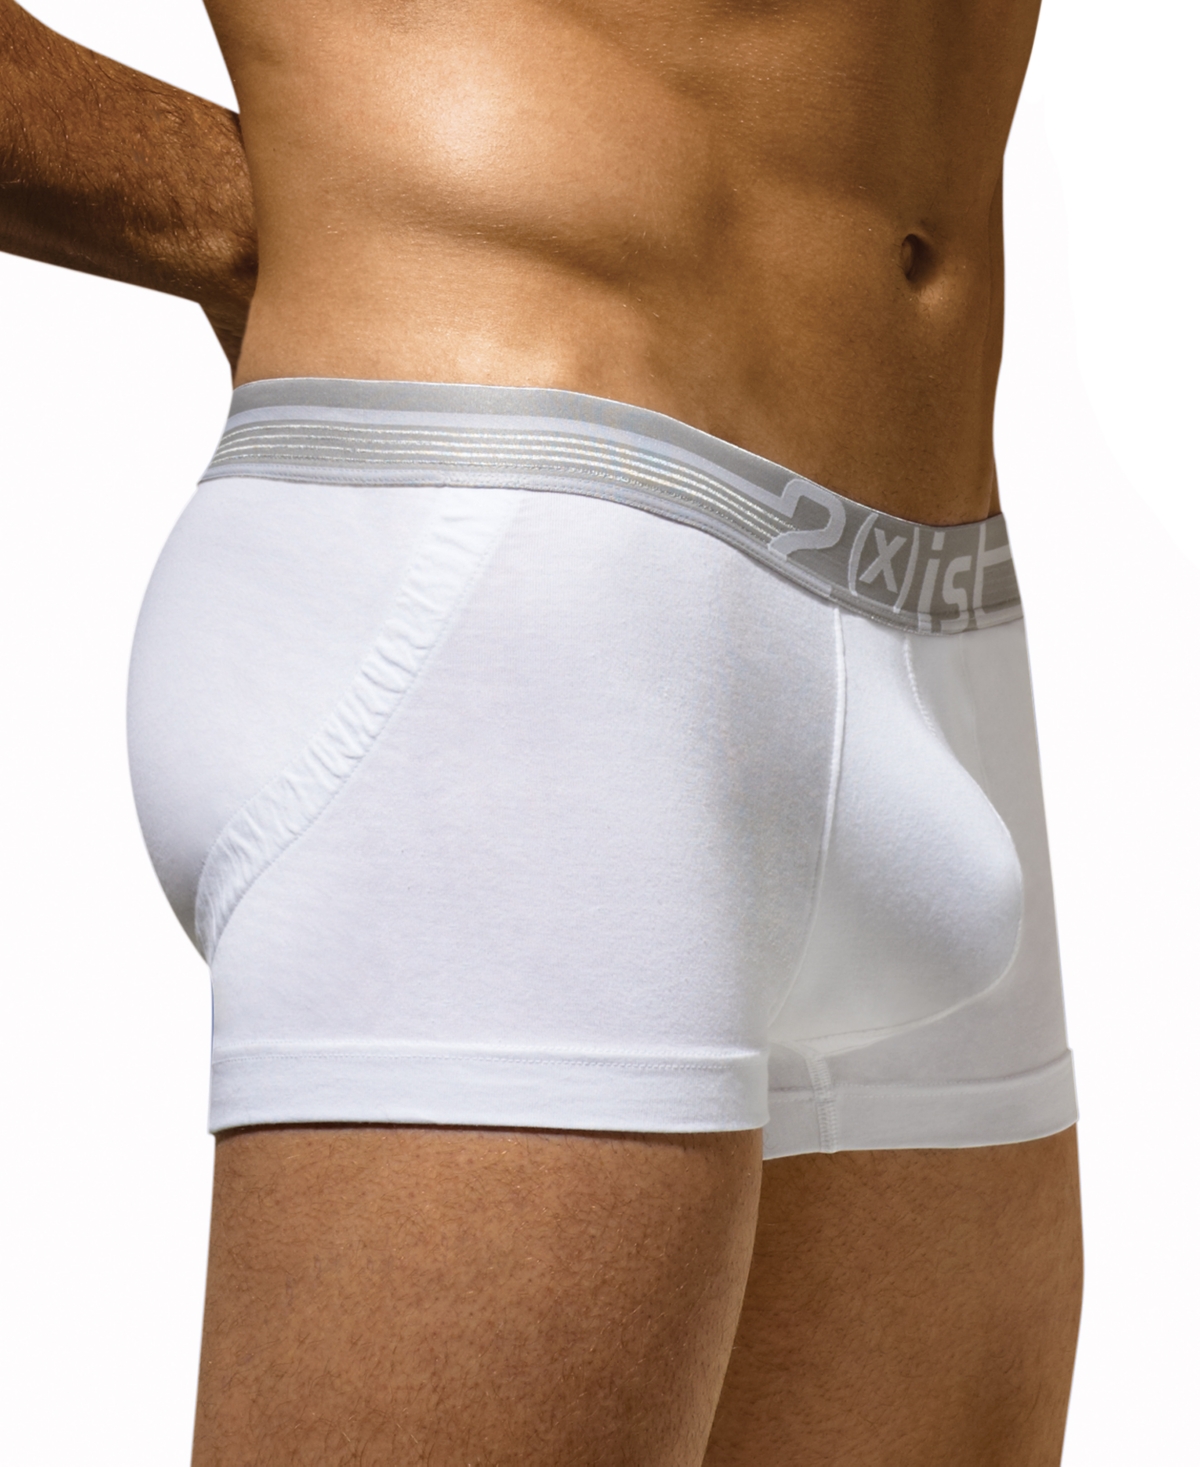 2(x)ist Men's Underwear, Dual Lifting Tagless Trunk - white